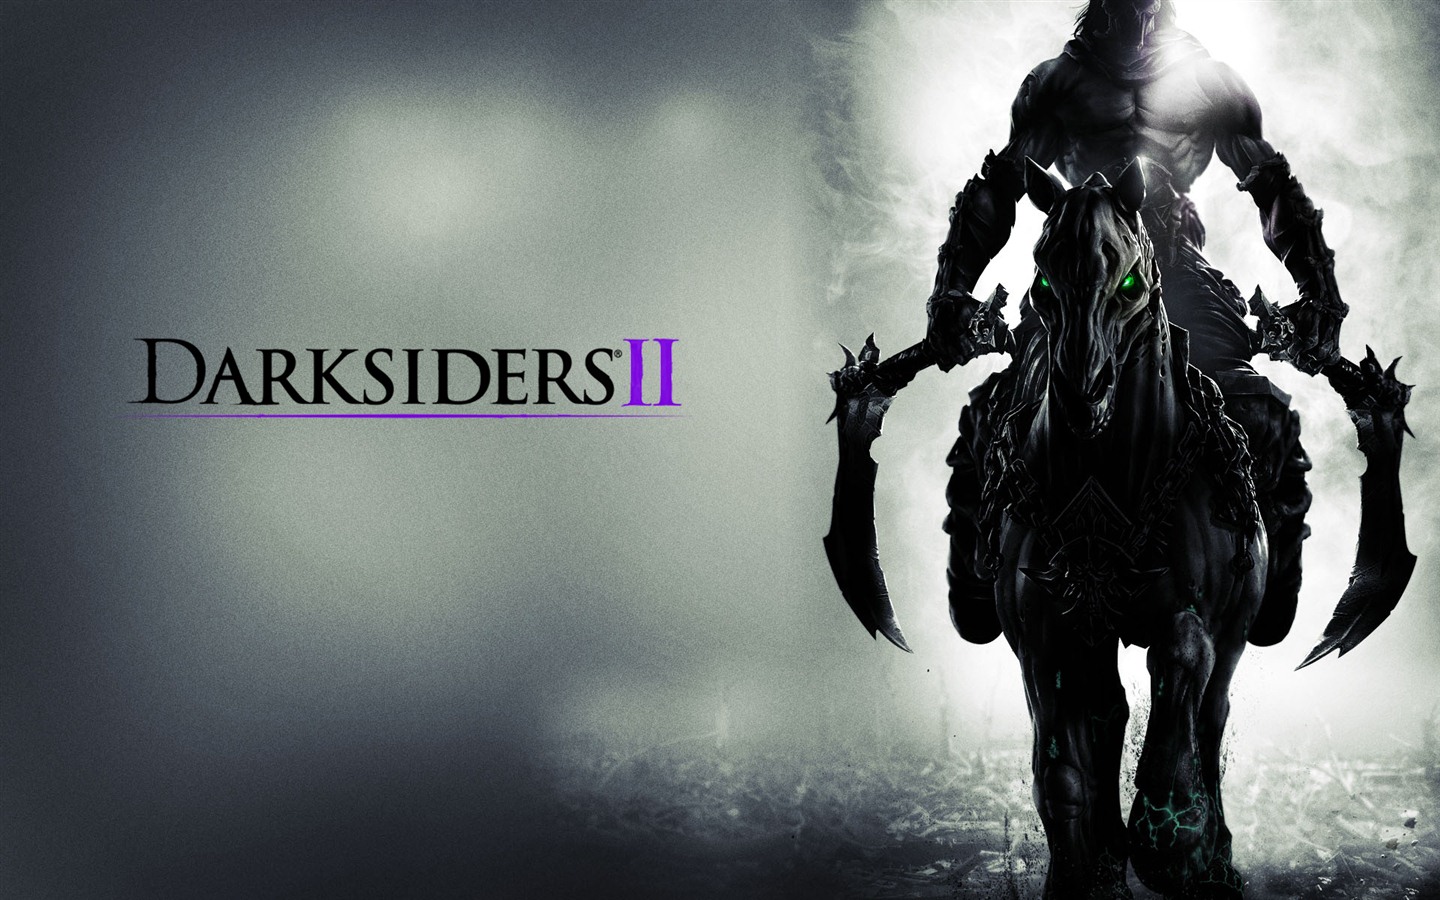 Darksiders II 暗黑血统 2 游戏高清壁纸4 - 1440x900